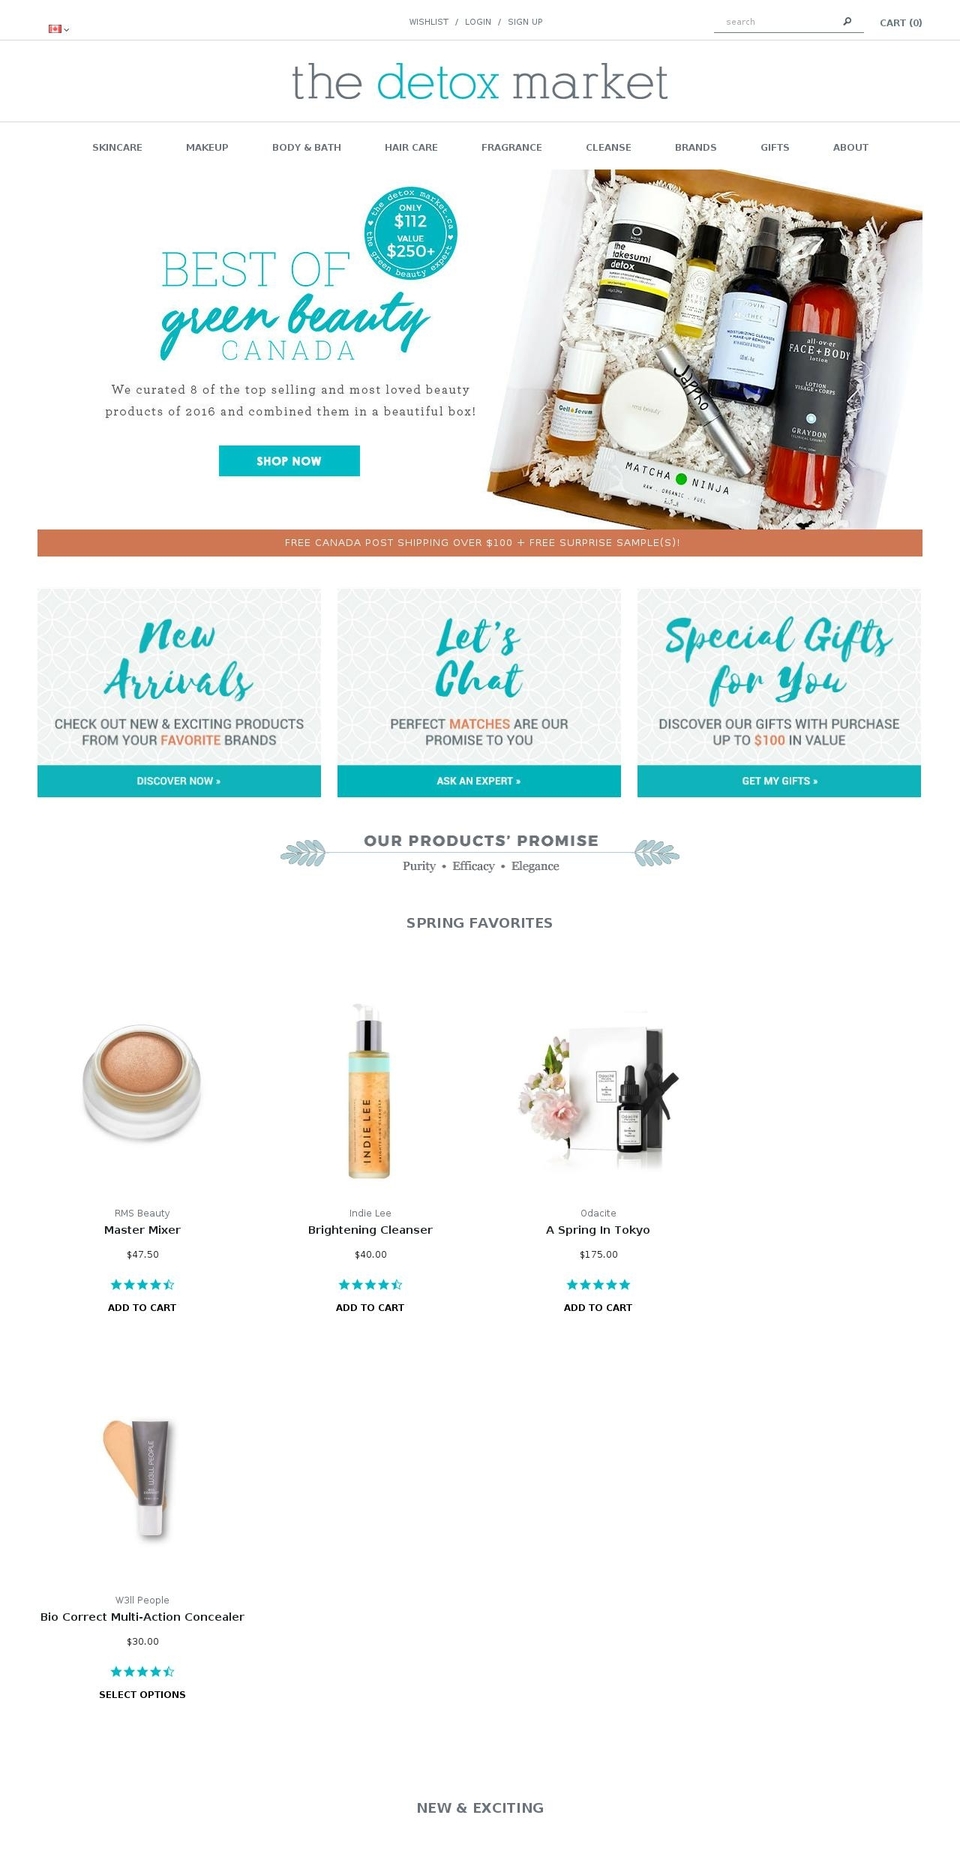 thedetoxmarket.ca shopify website screenshot